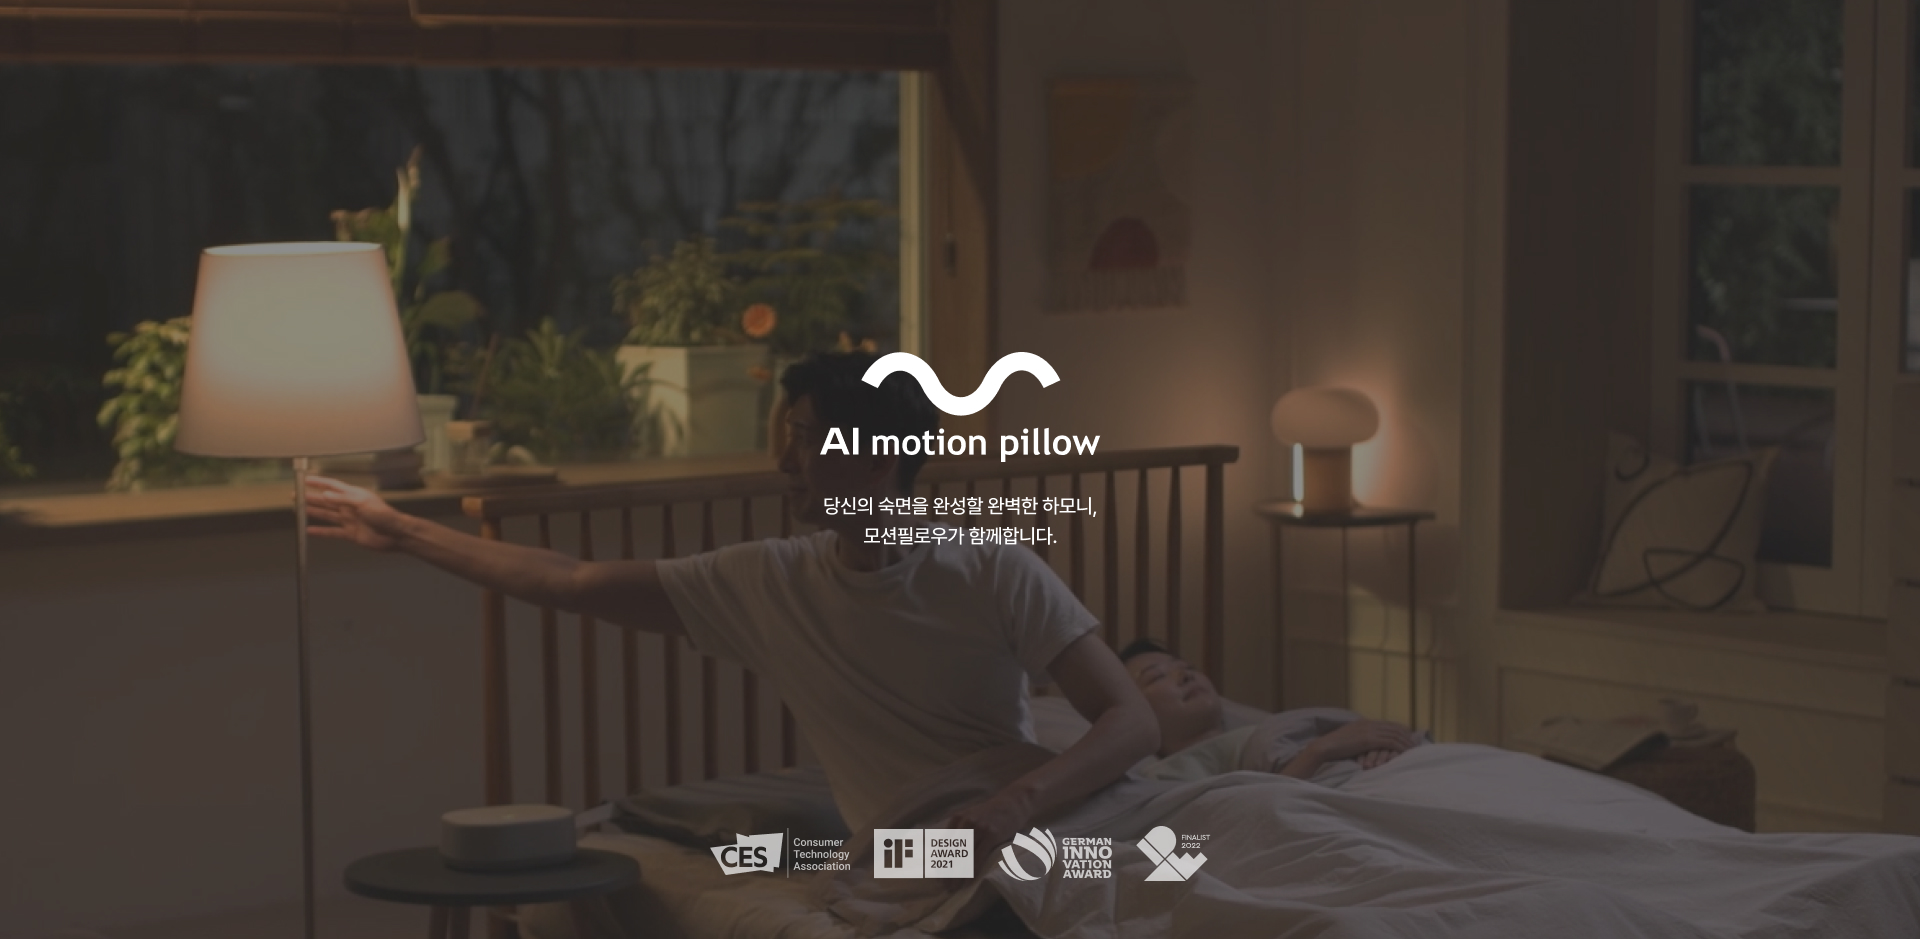 motion pillow - 당신의 숙면을 완성할 완벽한 하모니, 모션필로우가 함께합니다.